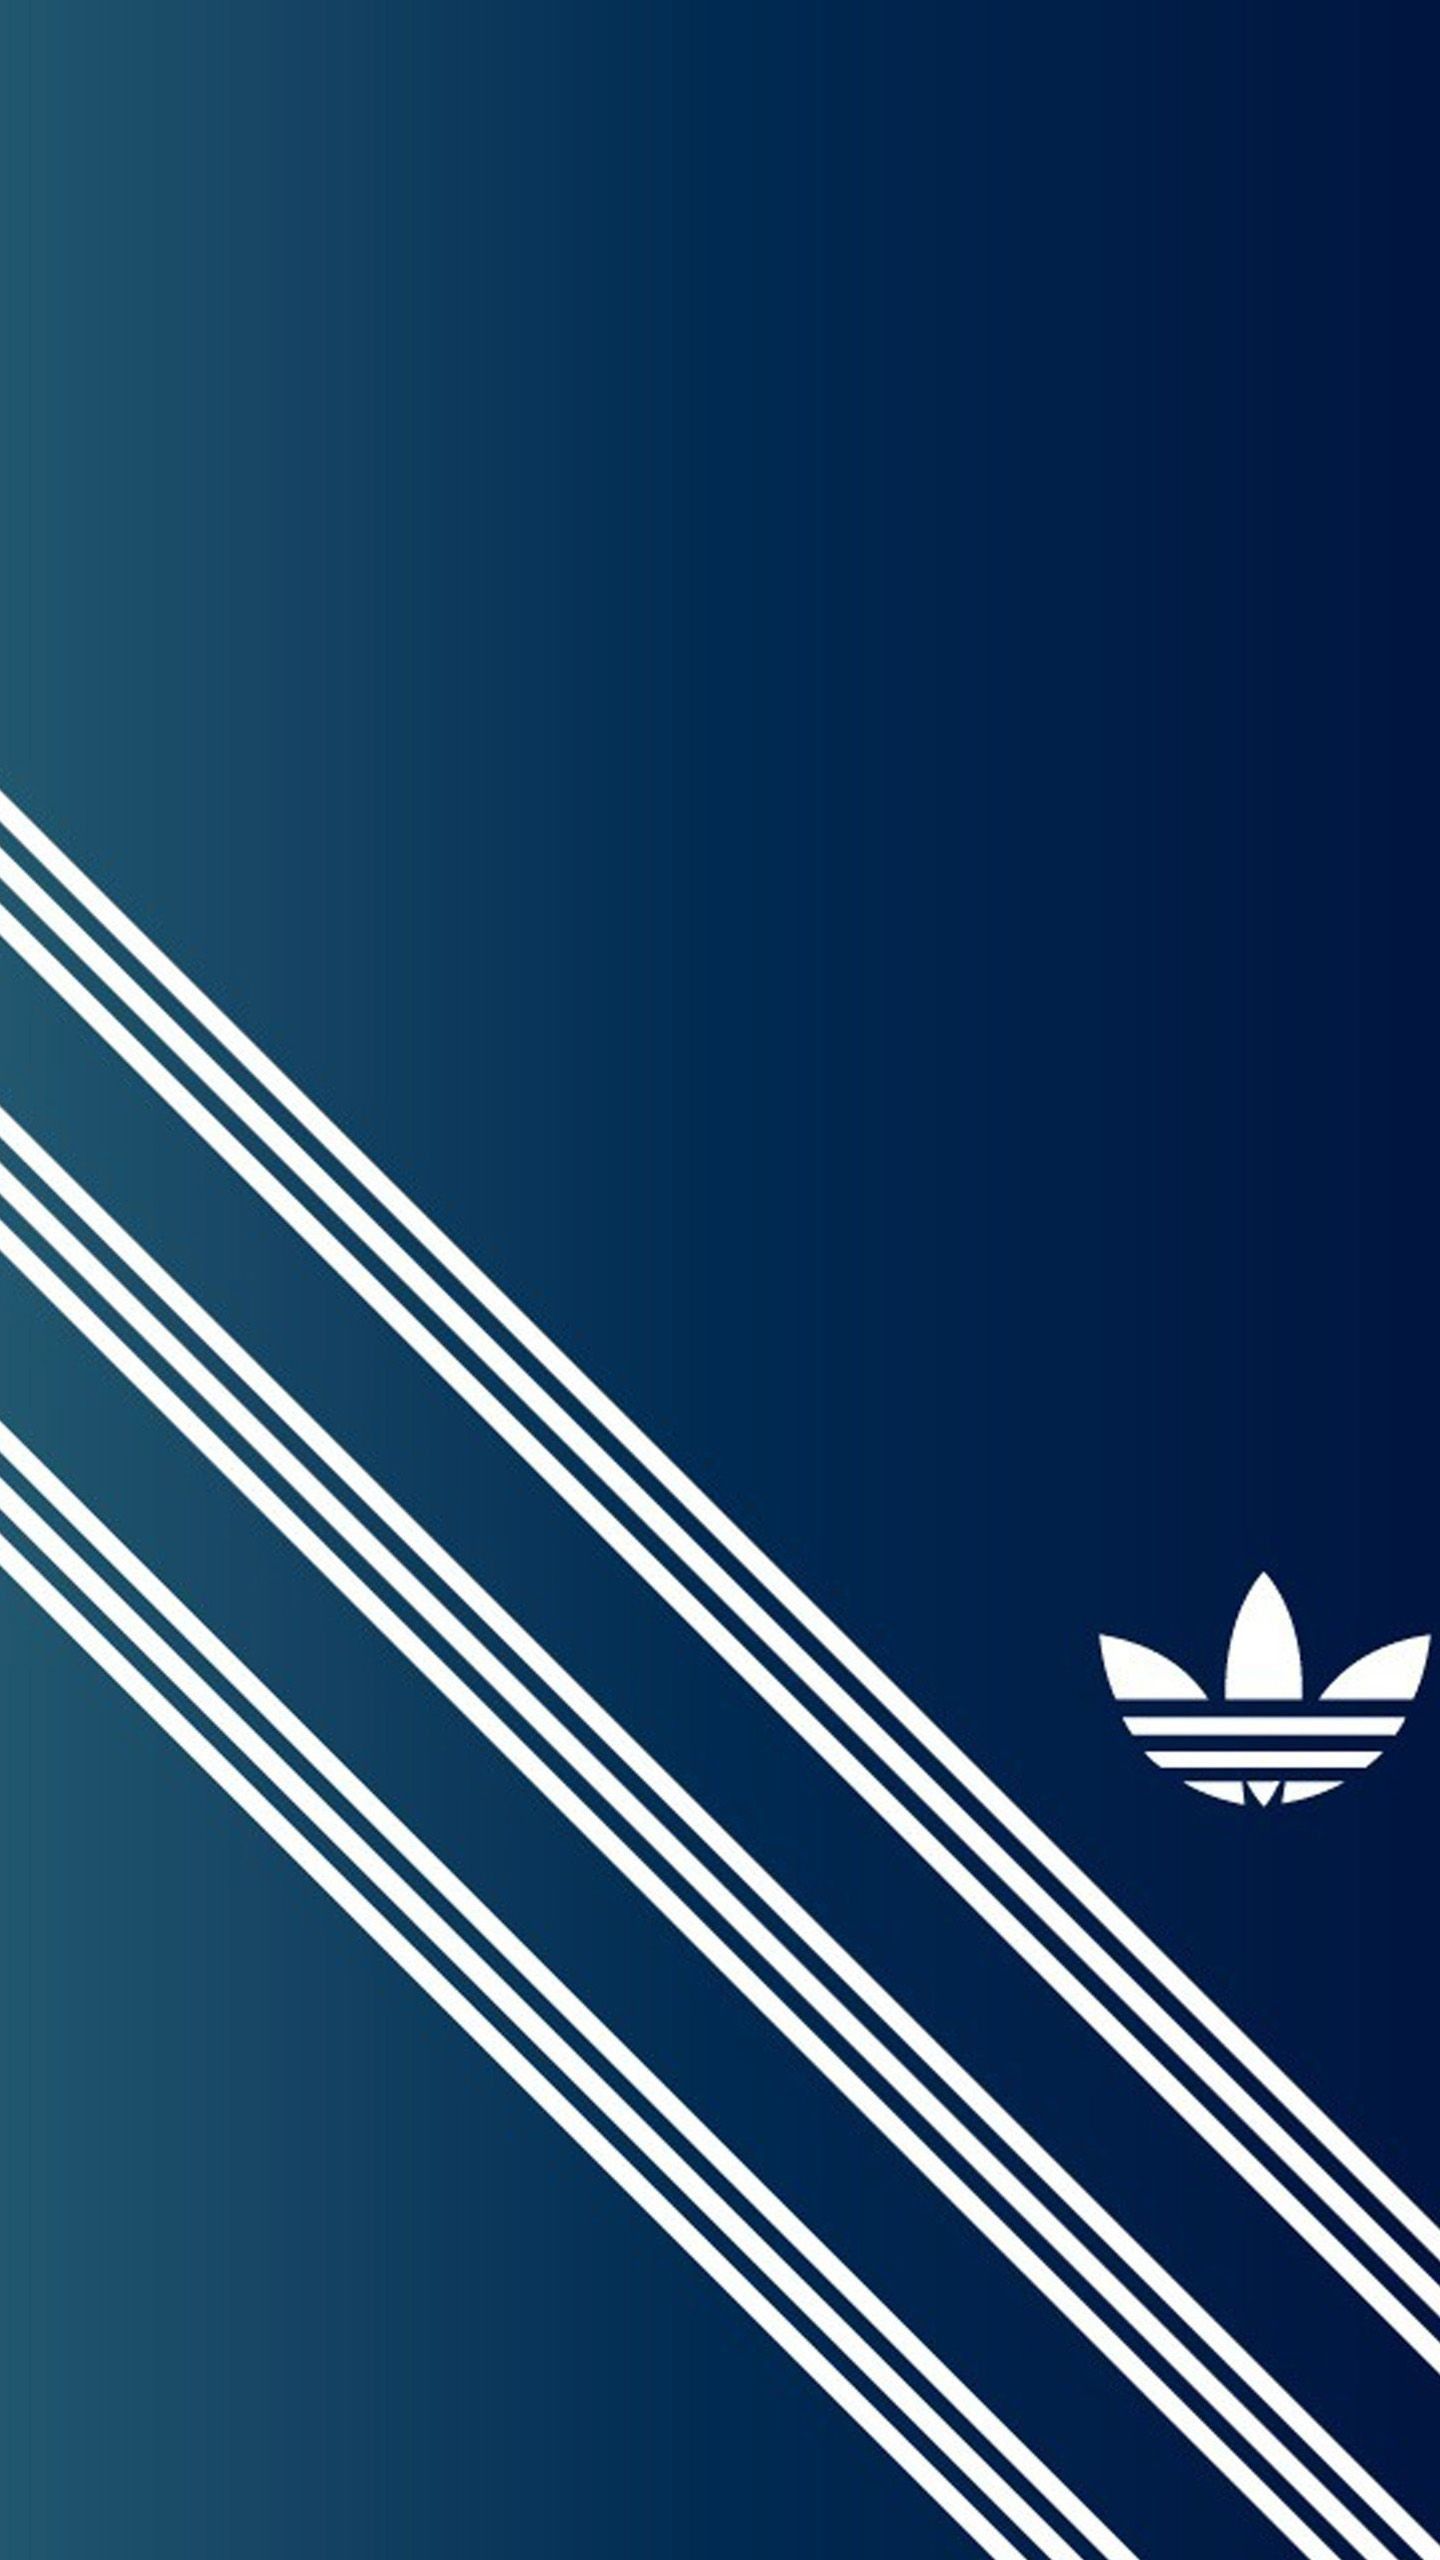 Blue and Black Adidas Wallpaper